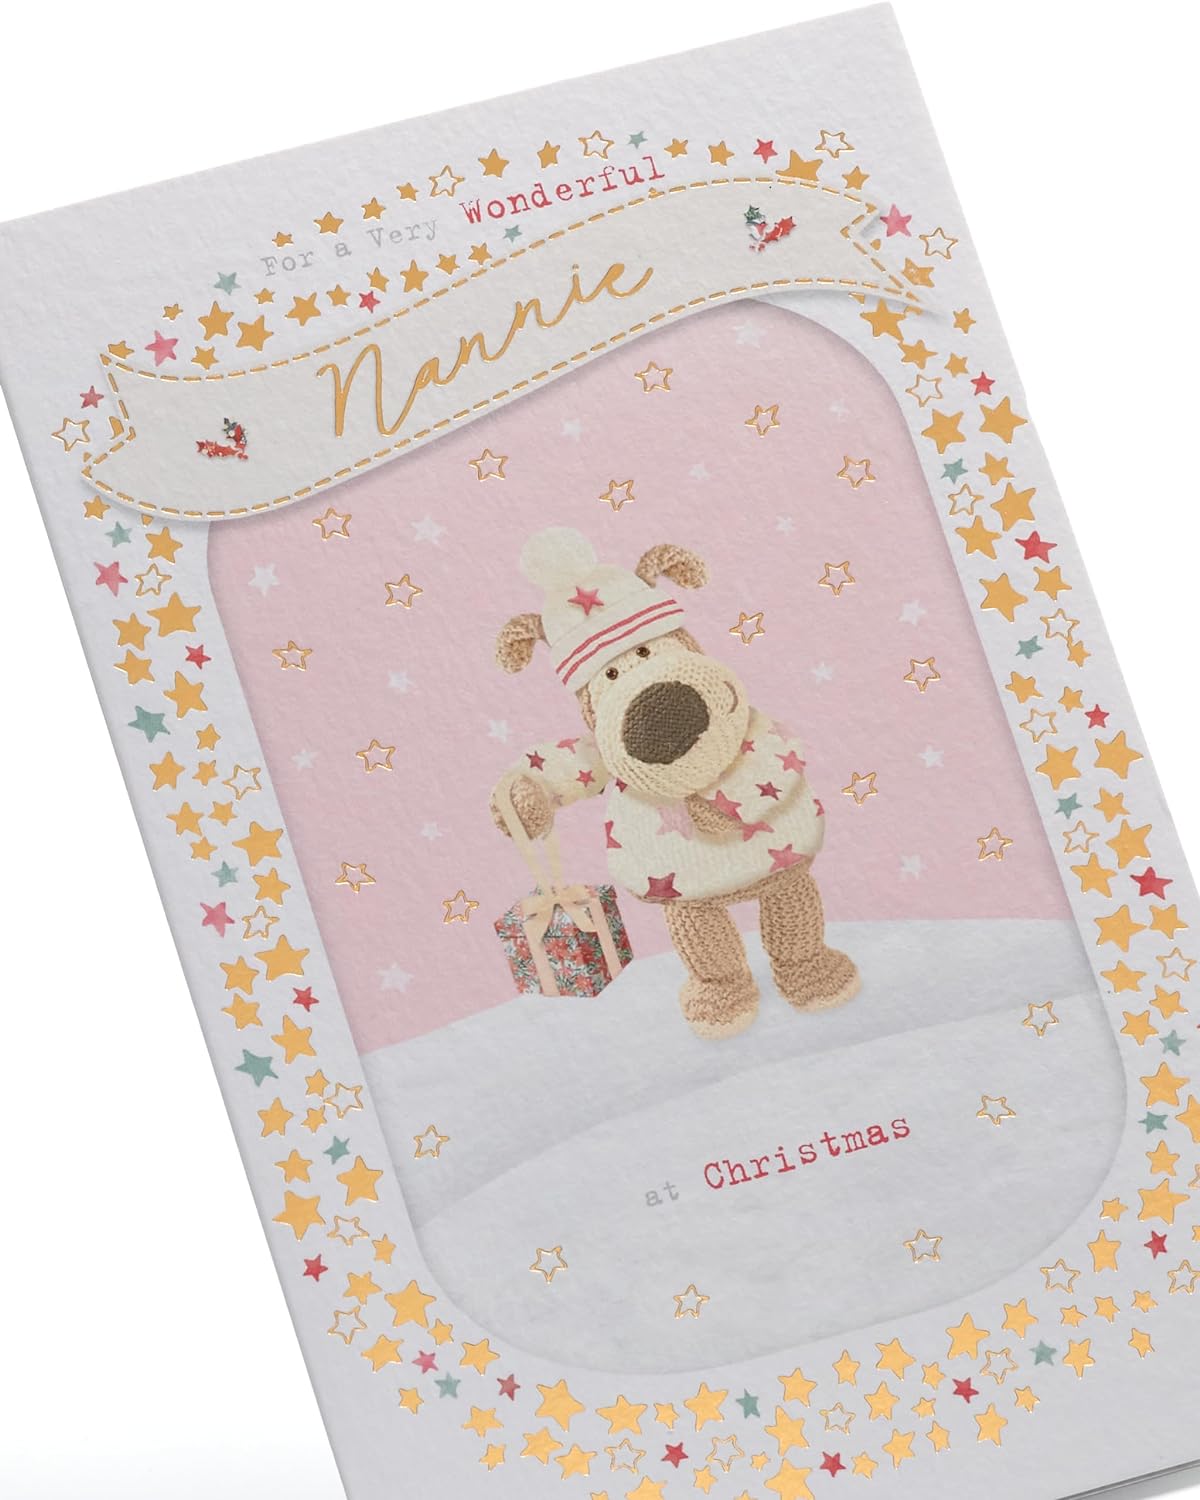 Boofle Very Wonderful Nannie Christmas Card